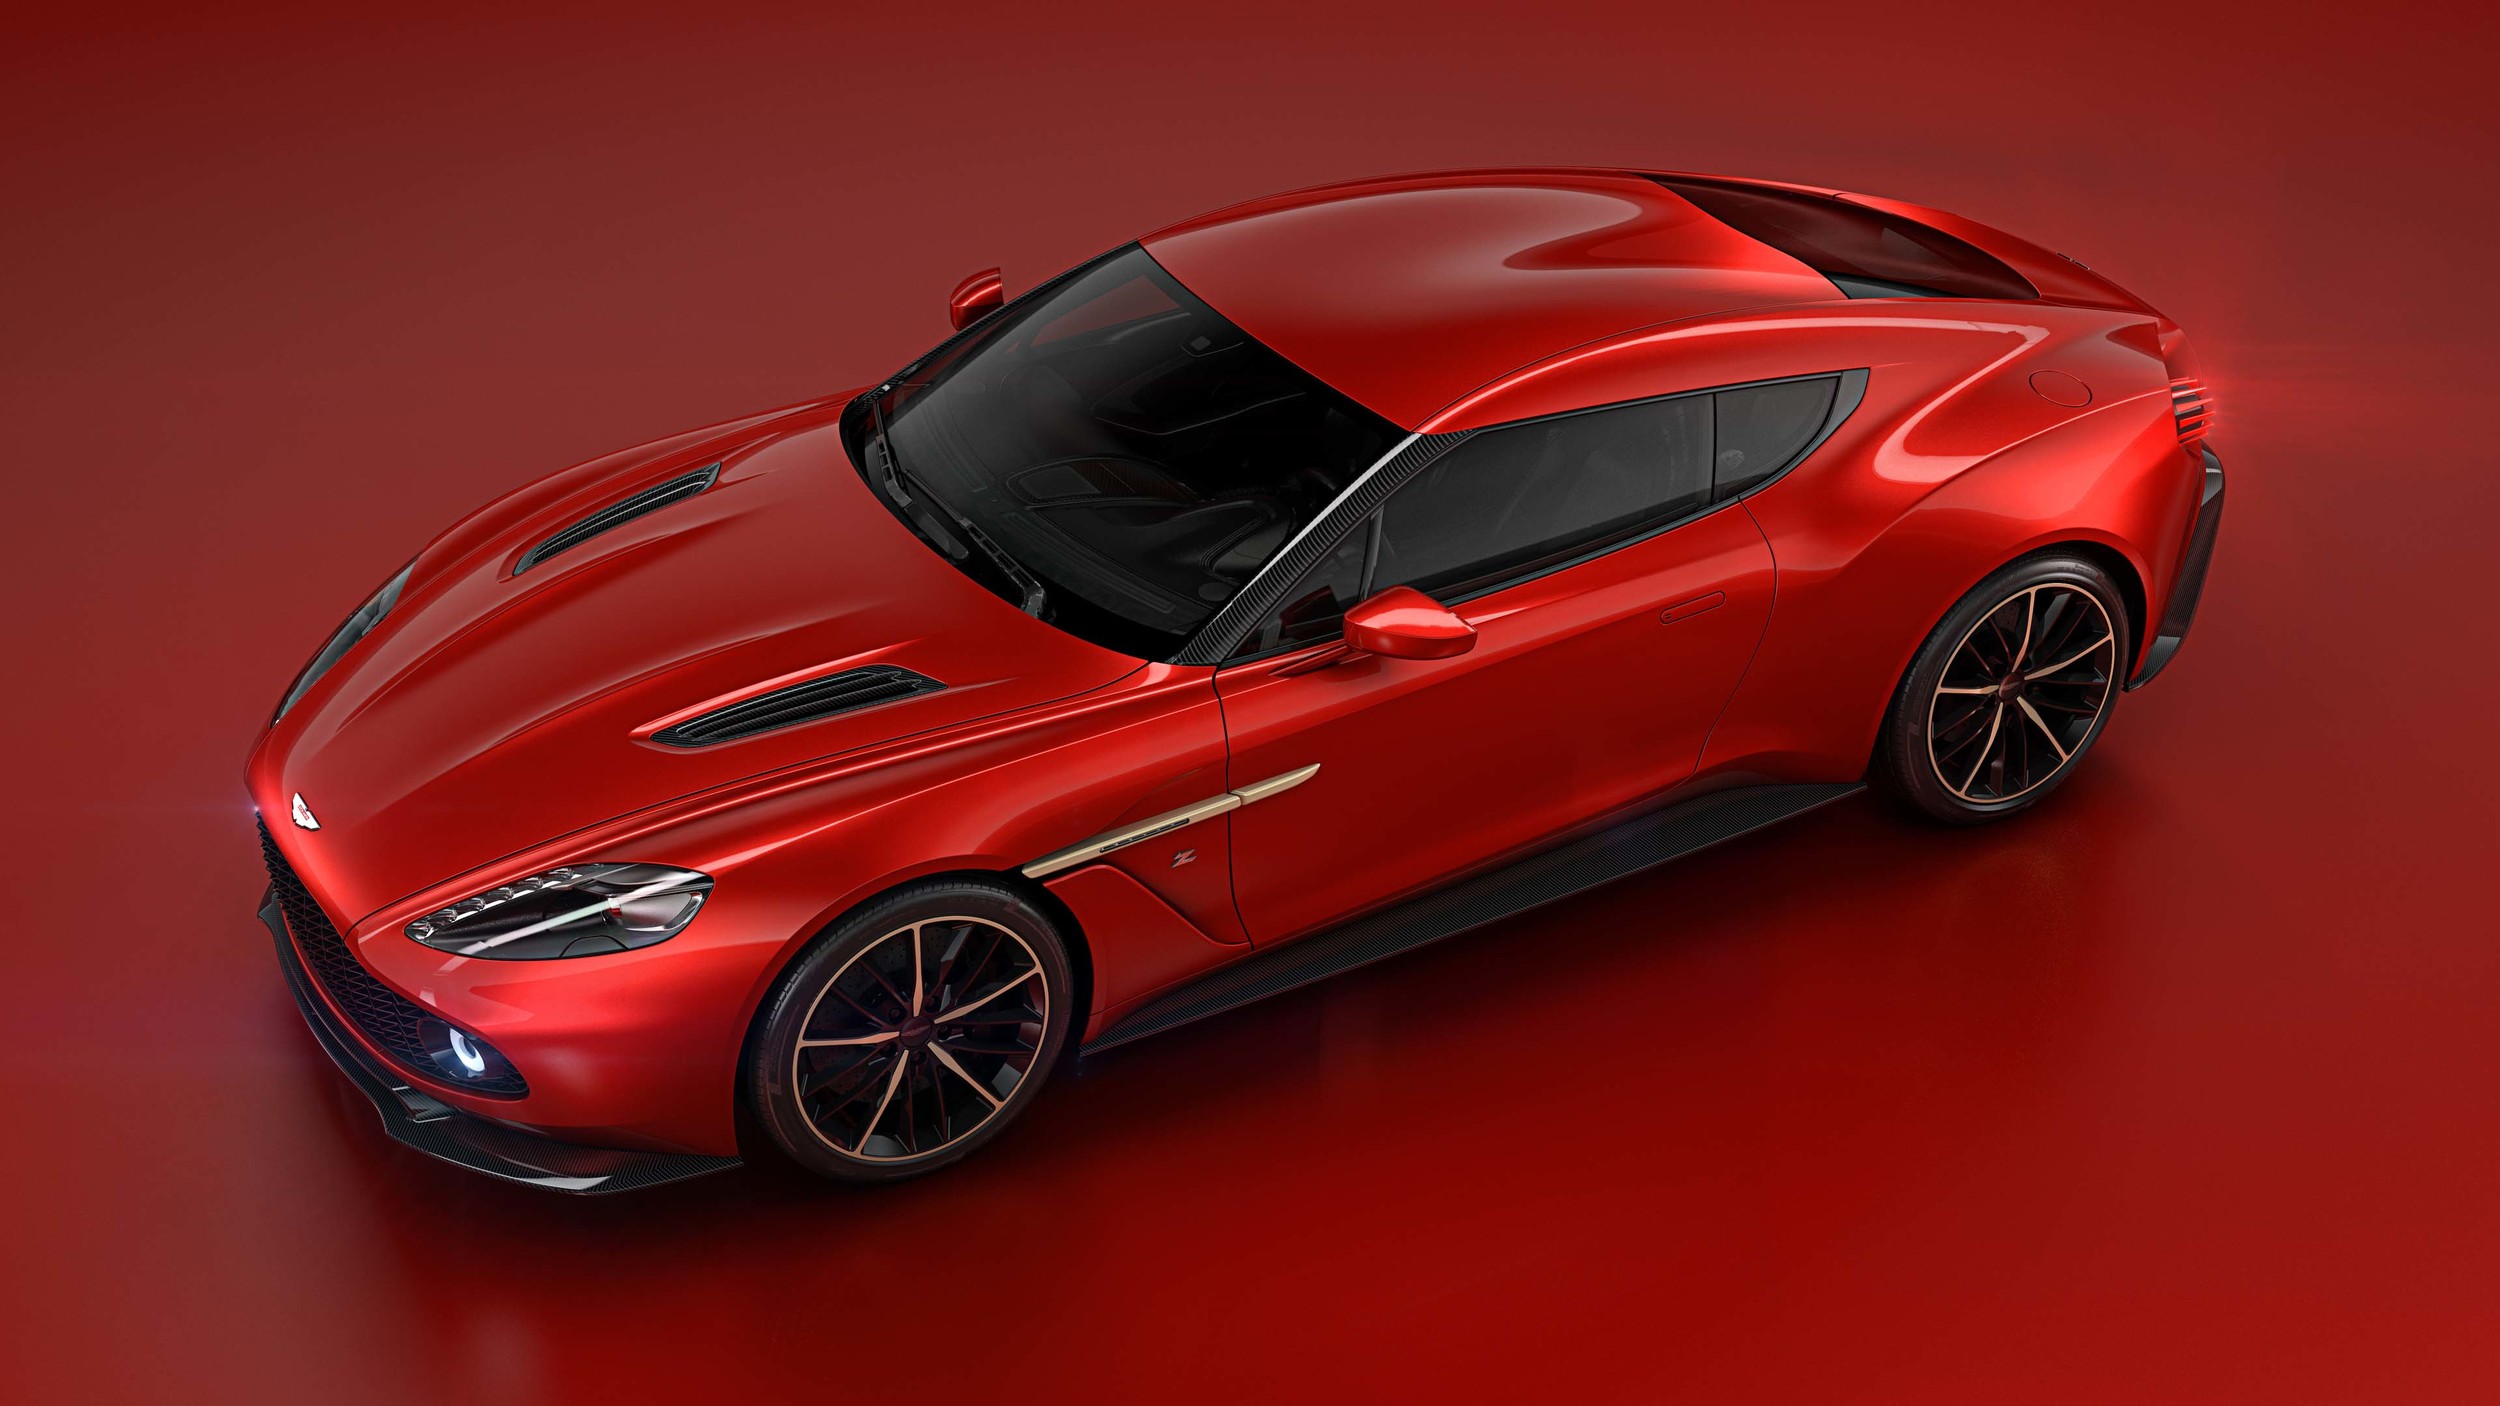 Aston Martin Vanquish Zagato Concept, 2016